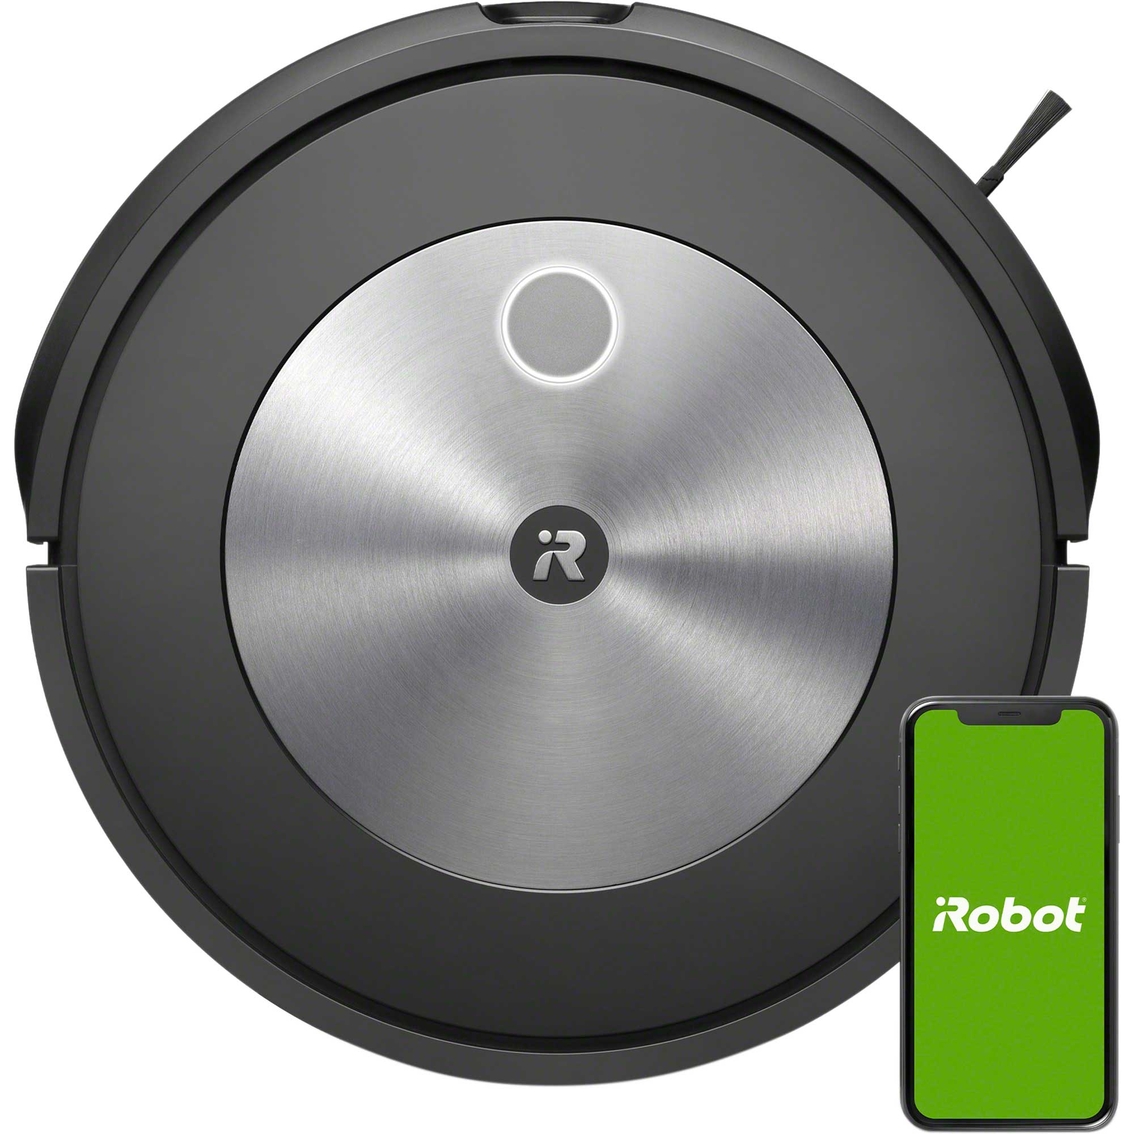 iRobot Roomba j7 (7150) Wi-Fi Connected Robot Vacuum - Image 1 of 10